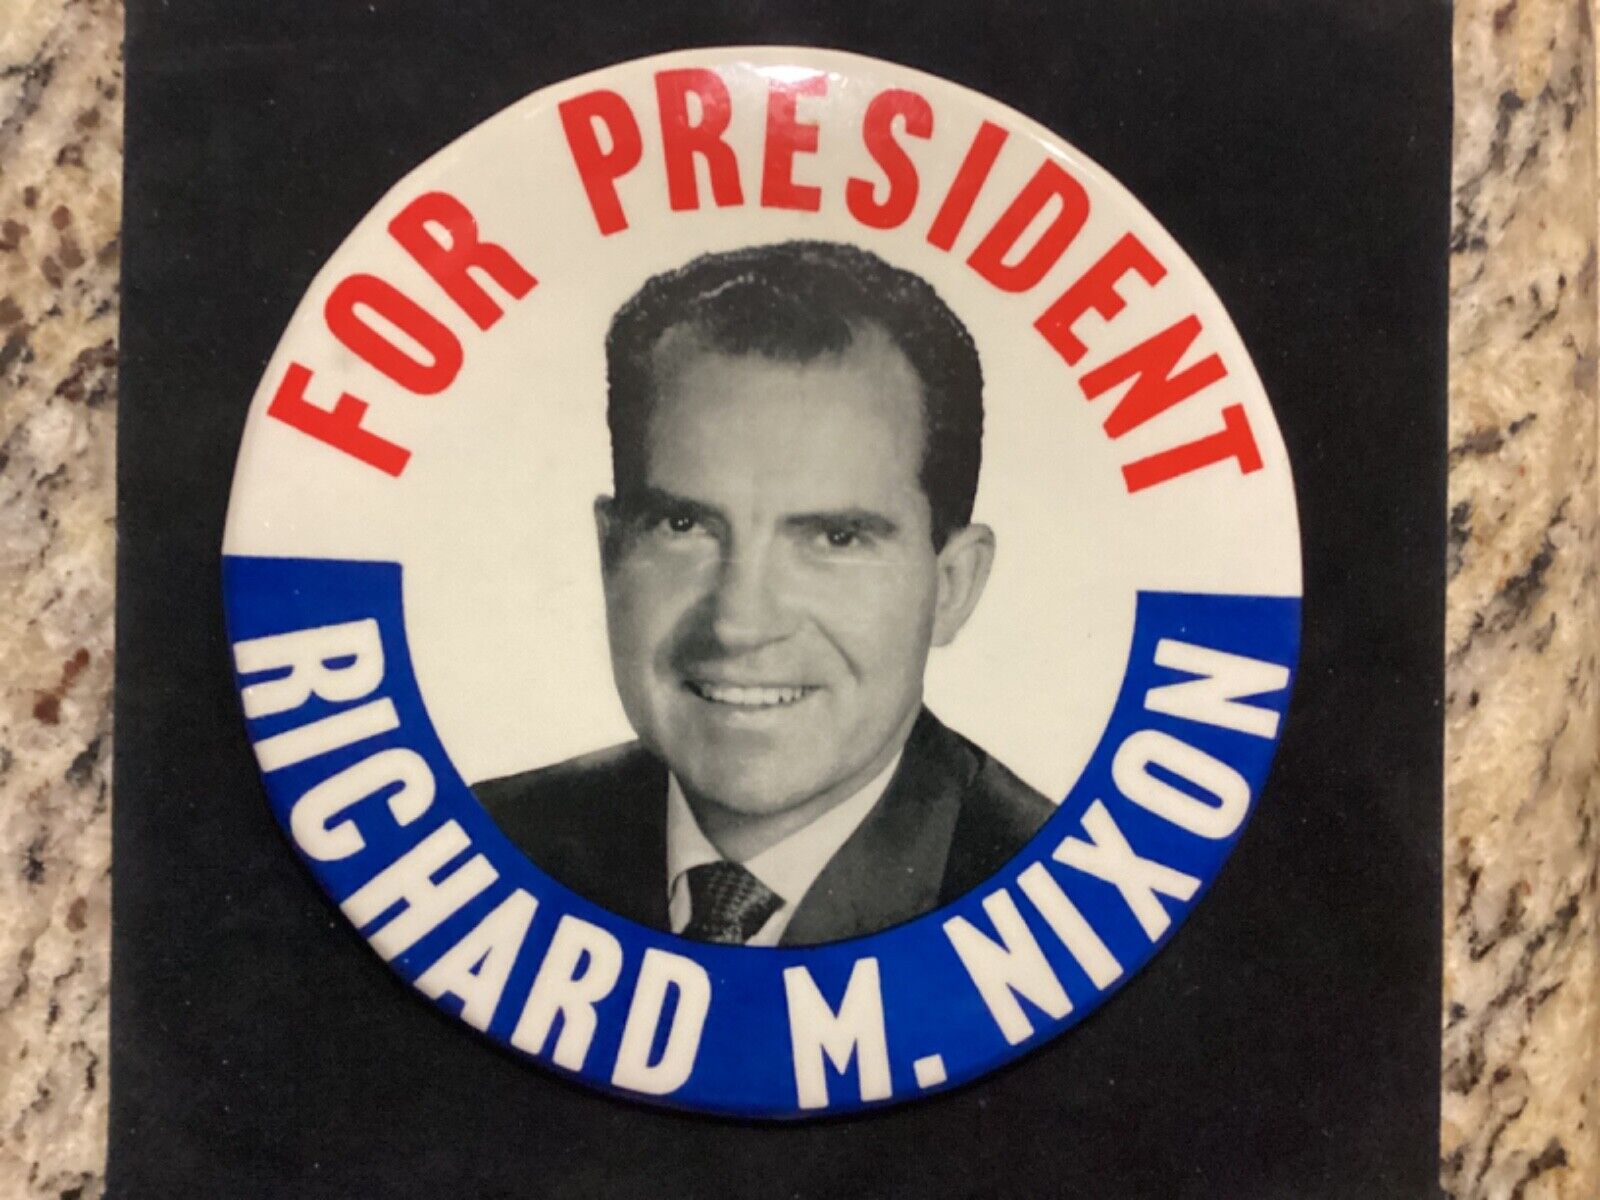 FOR PRESIDENT RICHARD M. NIXON 6 INCH POLITICAL BUTTON